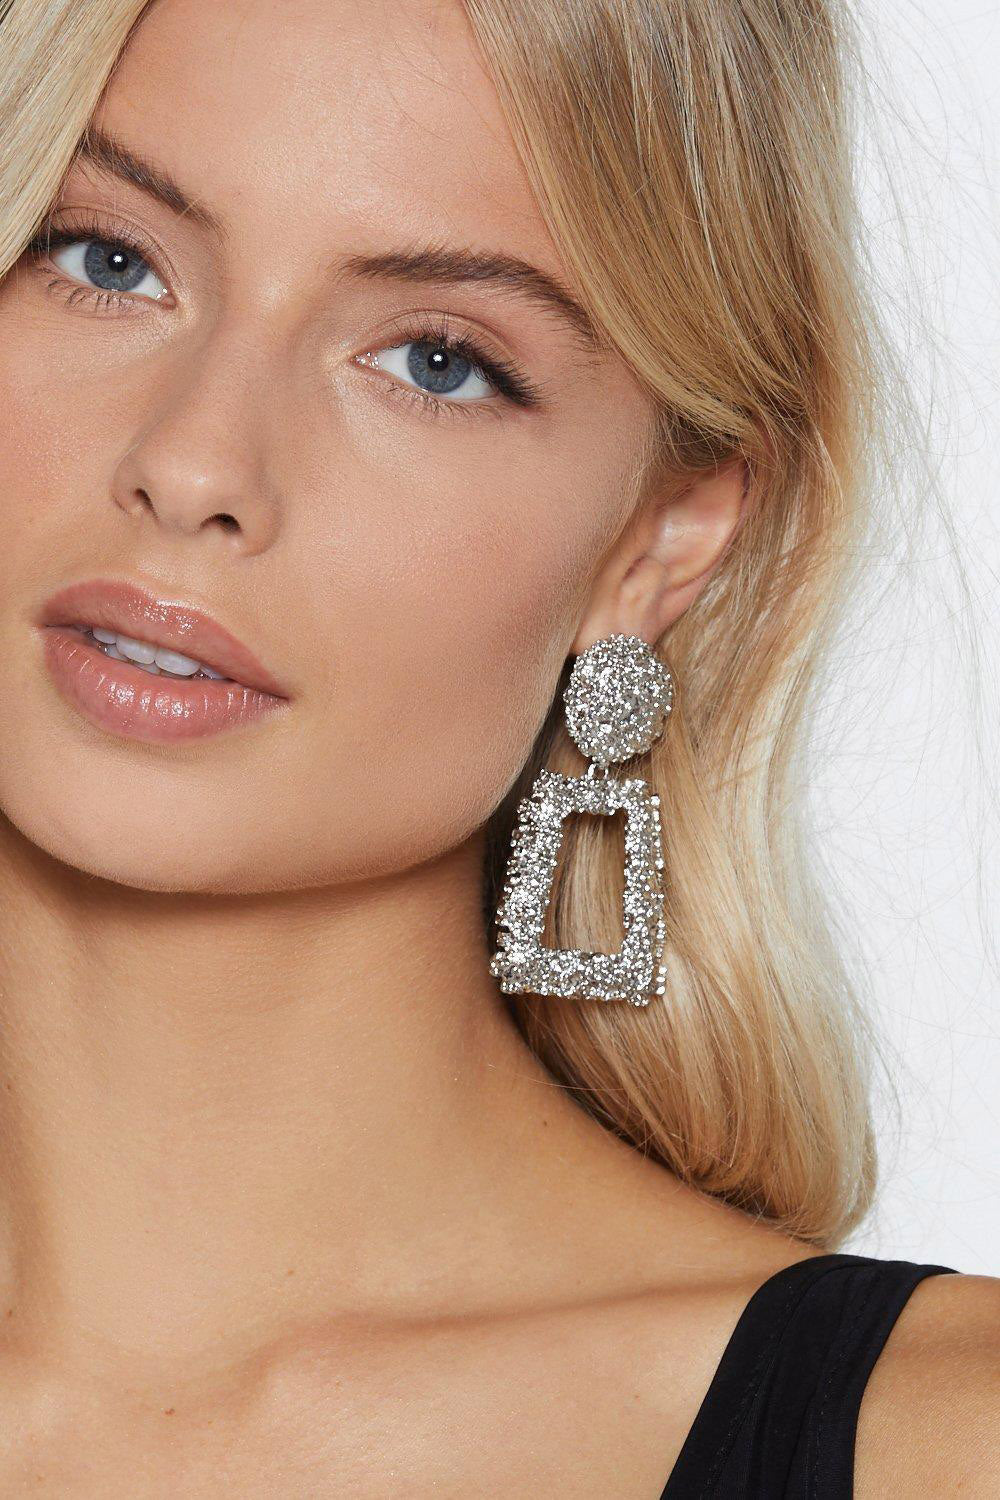 Girl wearing large earring